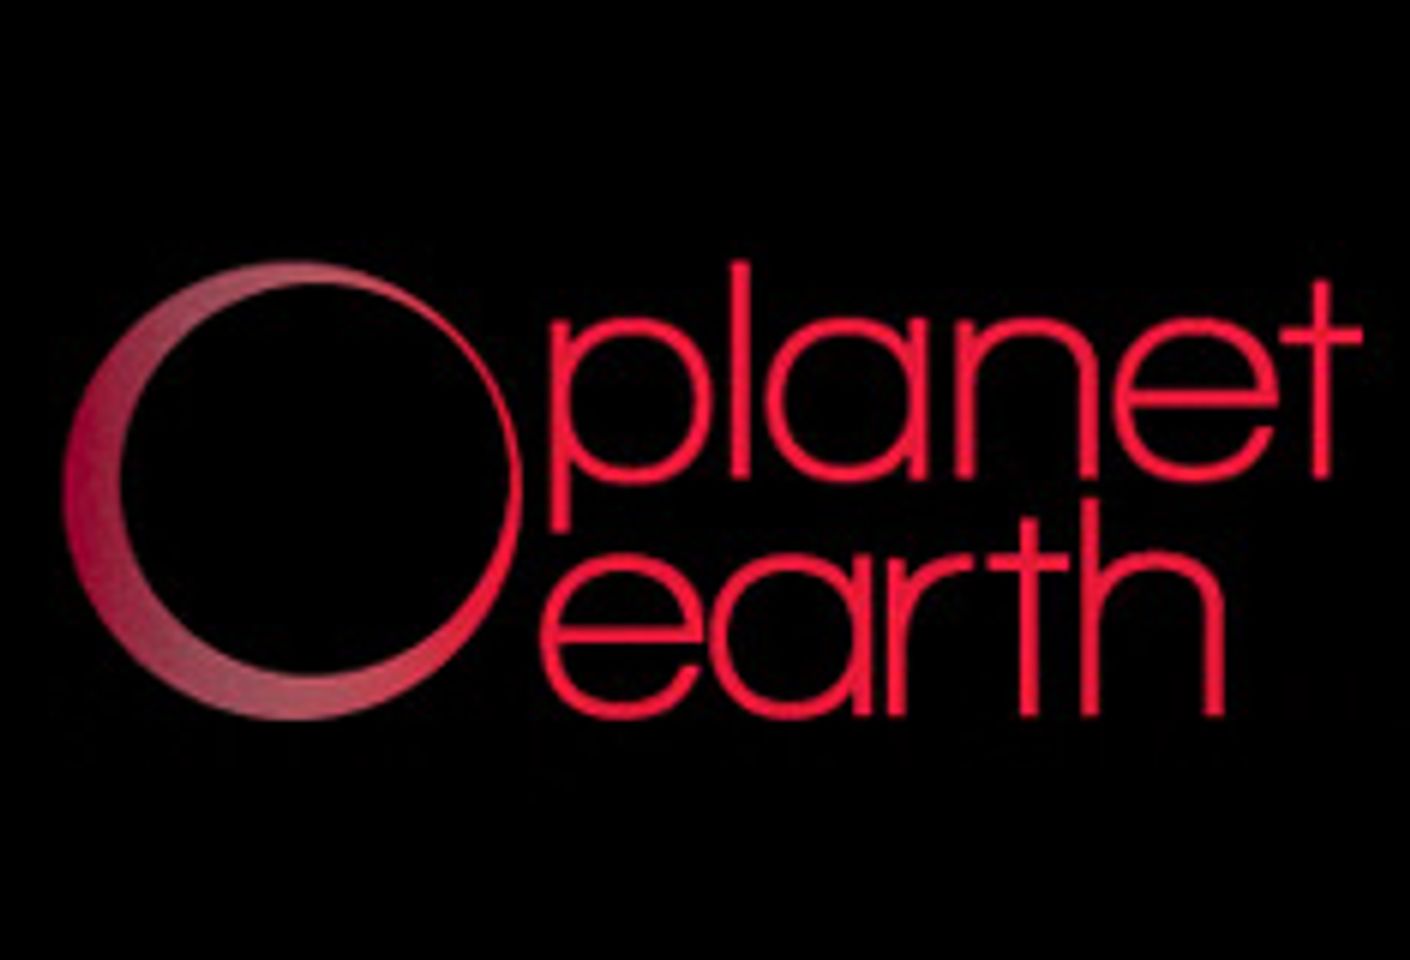 Planet Earth Secures Erotixxx Award